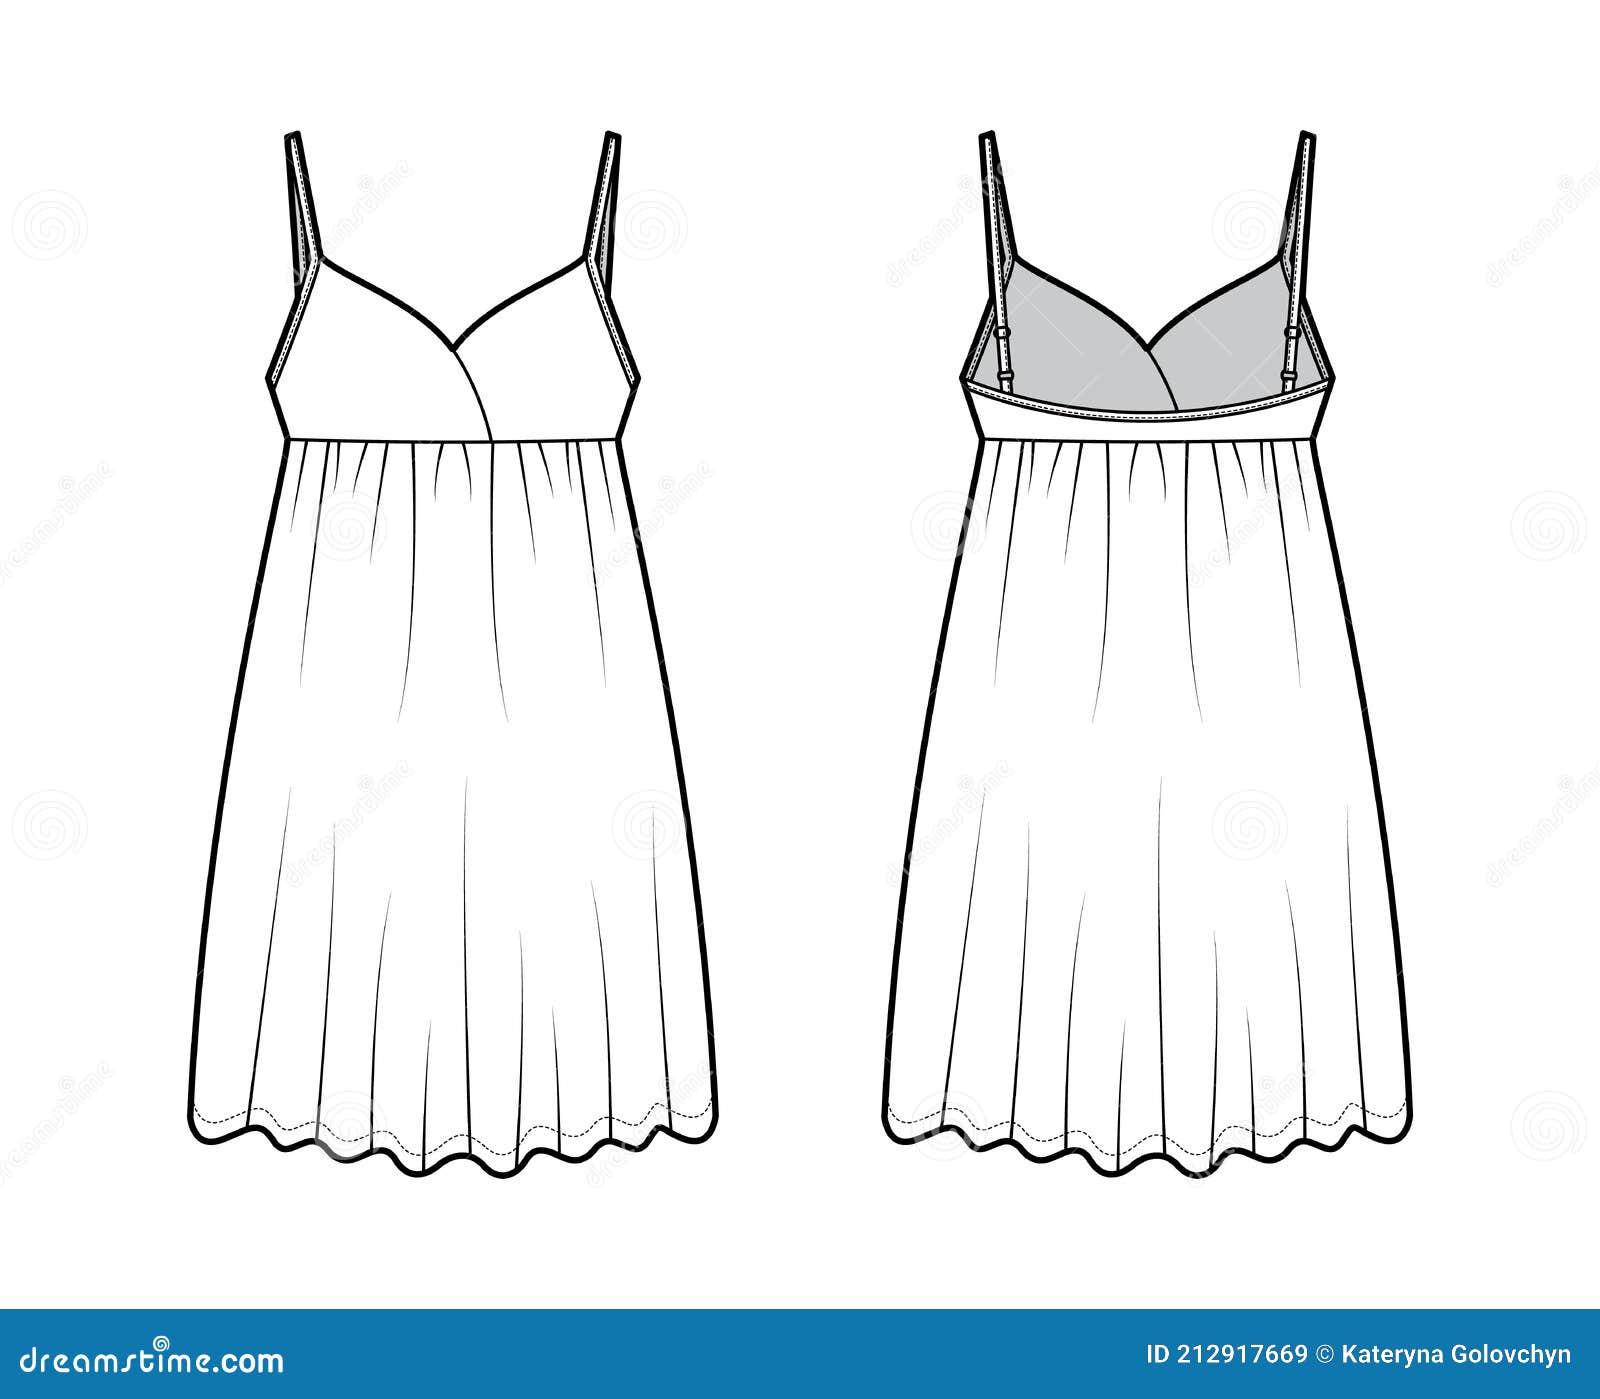 Babydoll Dress Sleepwear Pajama Technical Fashion Illustration with Mini  Length, Oversized, Adjustable Shoulder Straps Stock Vector - Illustration  of template, white: 212917669